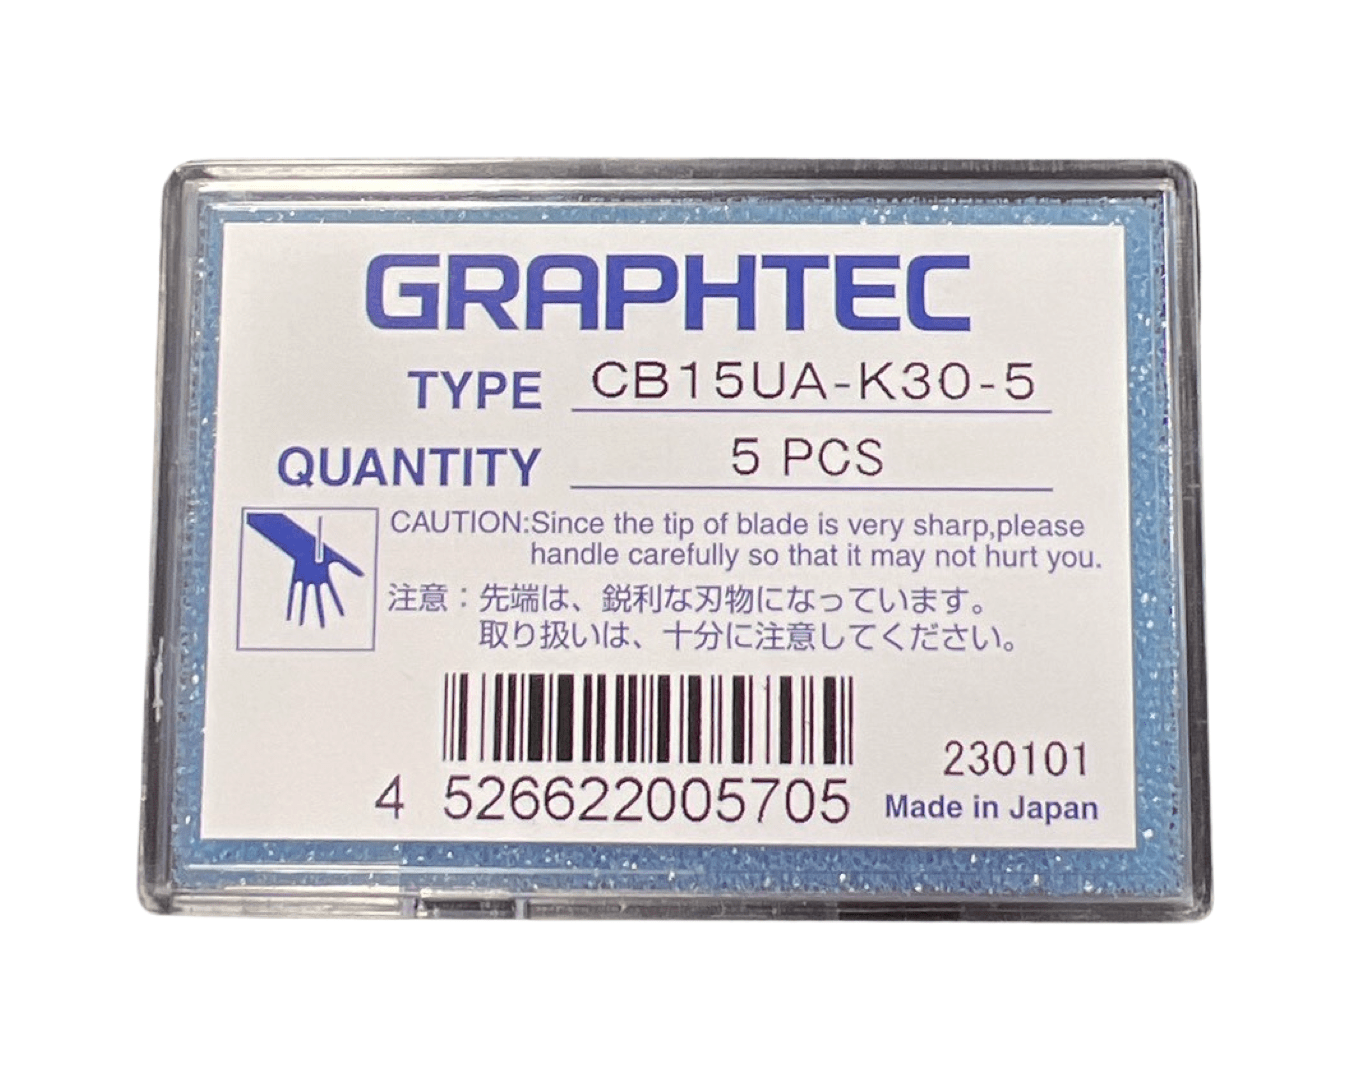 Graphtec CE7000-130 51 Desktop Vinyl Cutter and Plotter